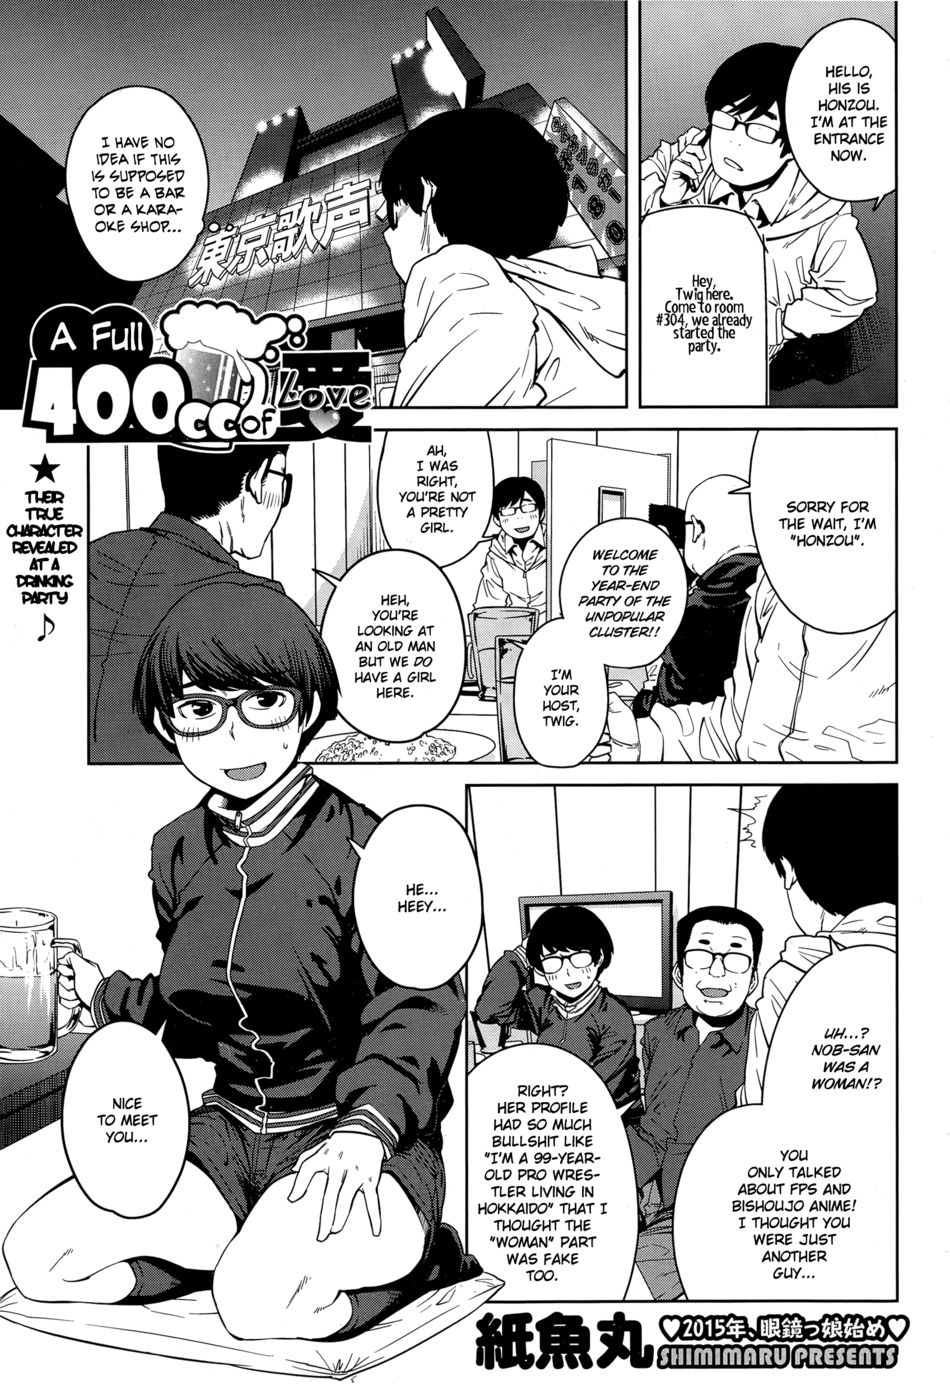 Hentai Manga Comic-A Full 400cc of Love-Read-1